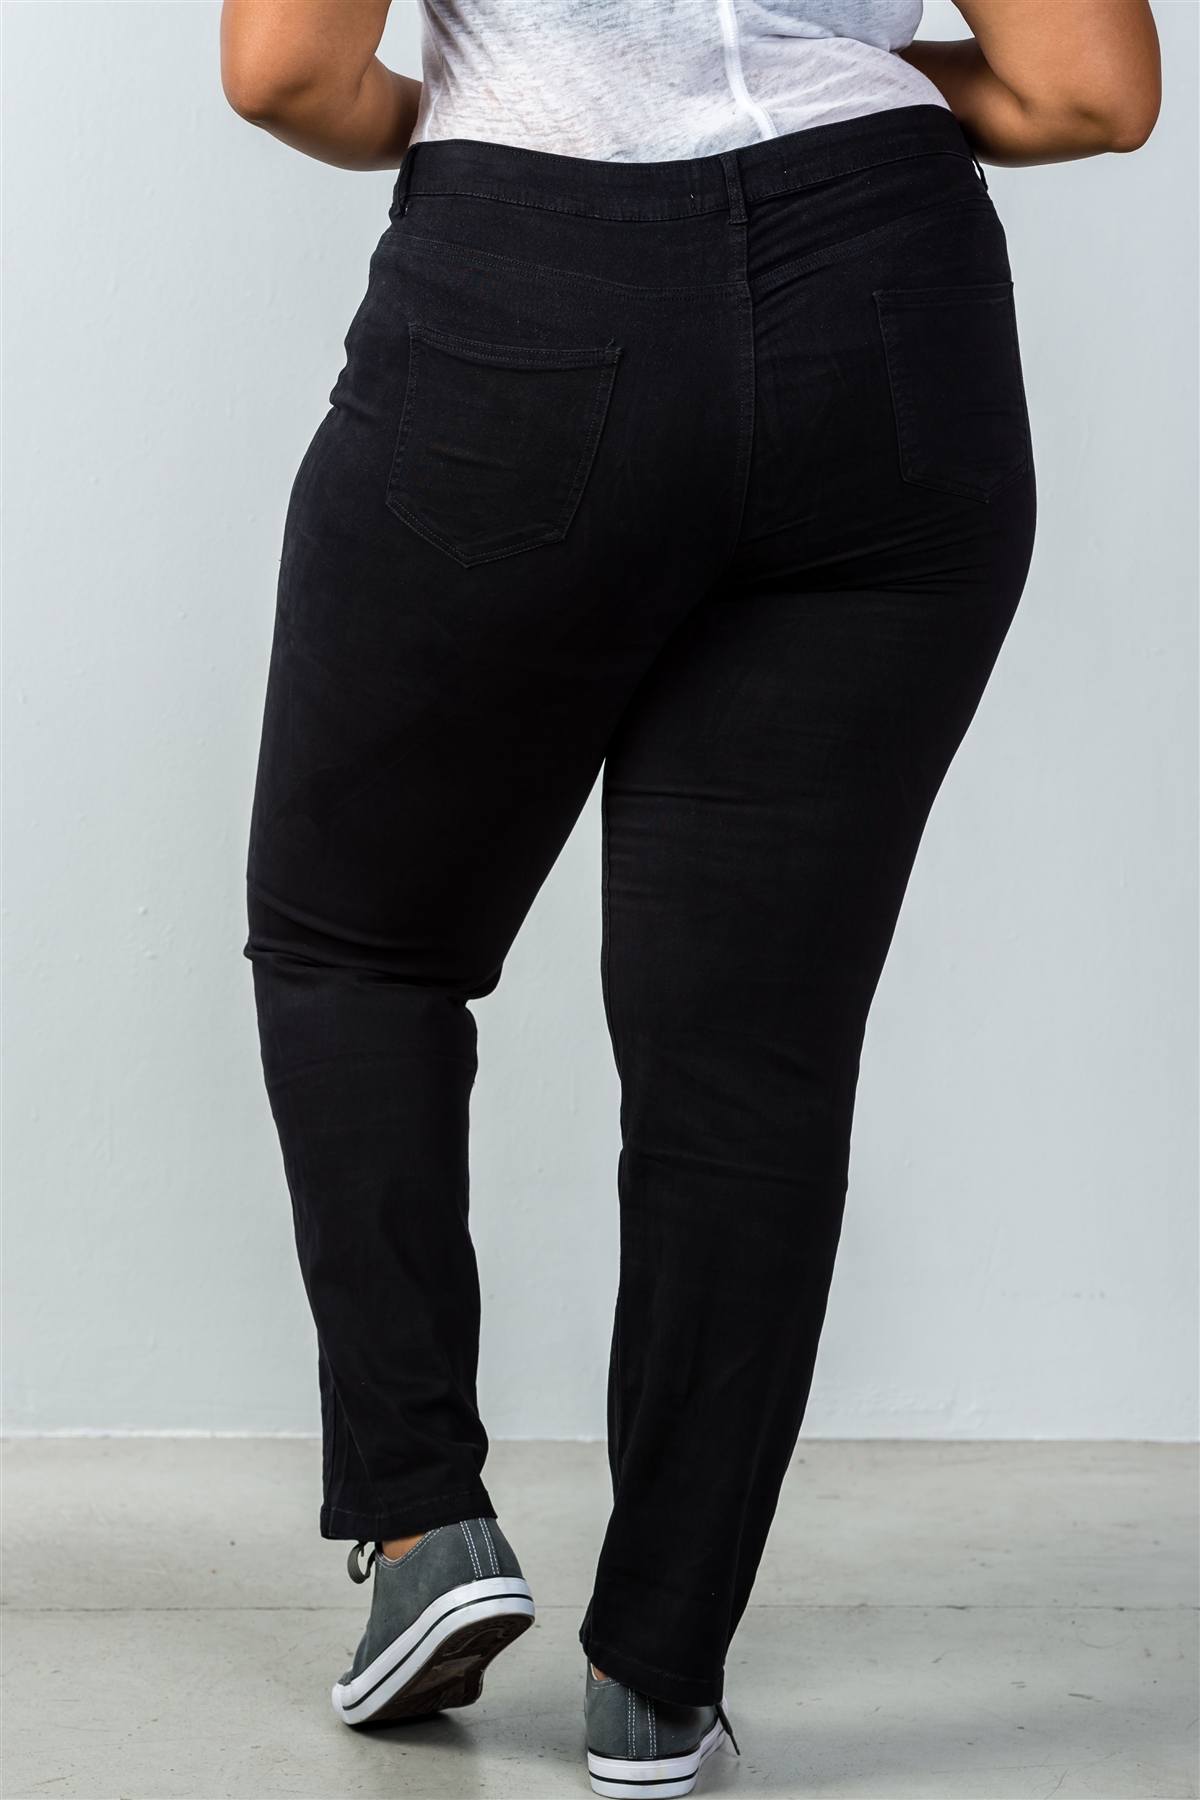 Ladies fashion plus size mid rise distressed jeans